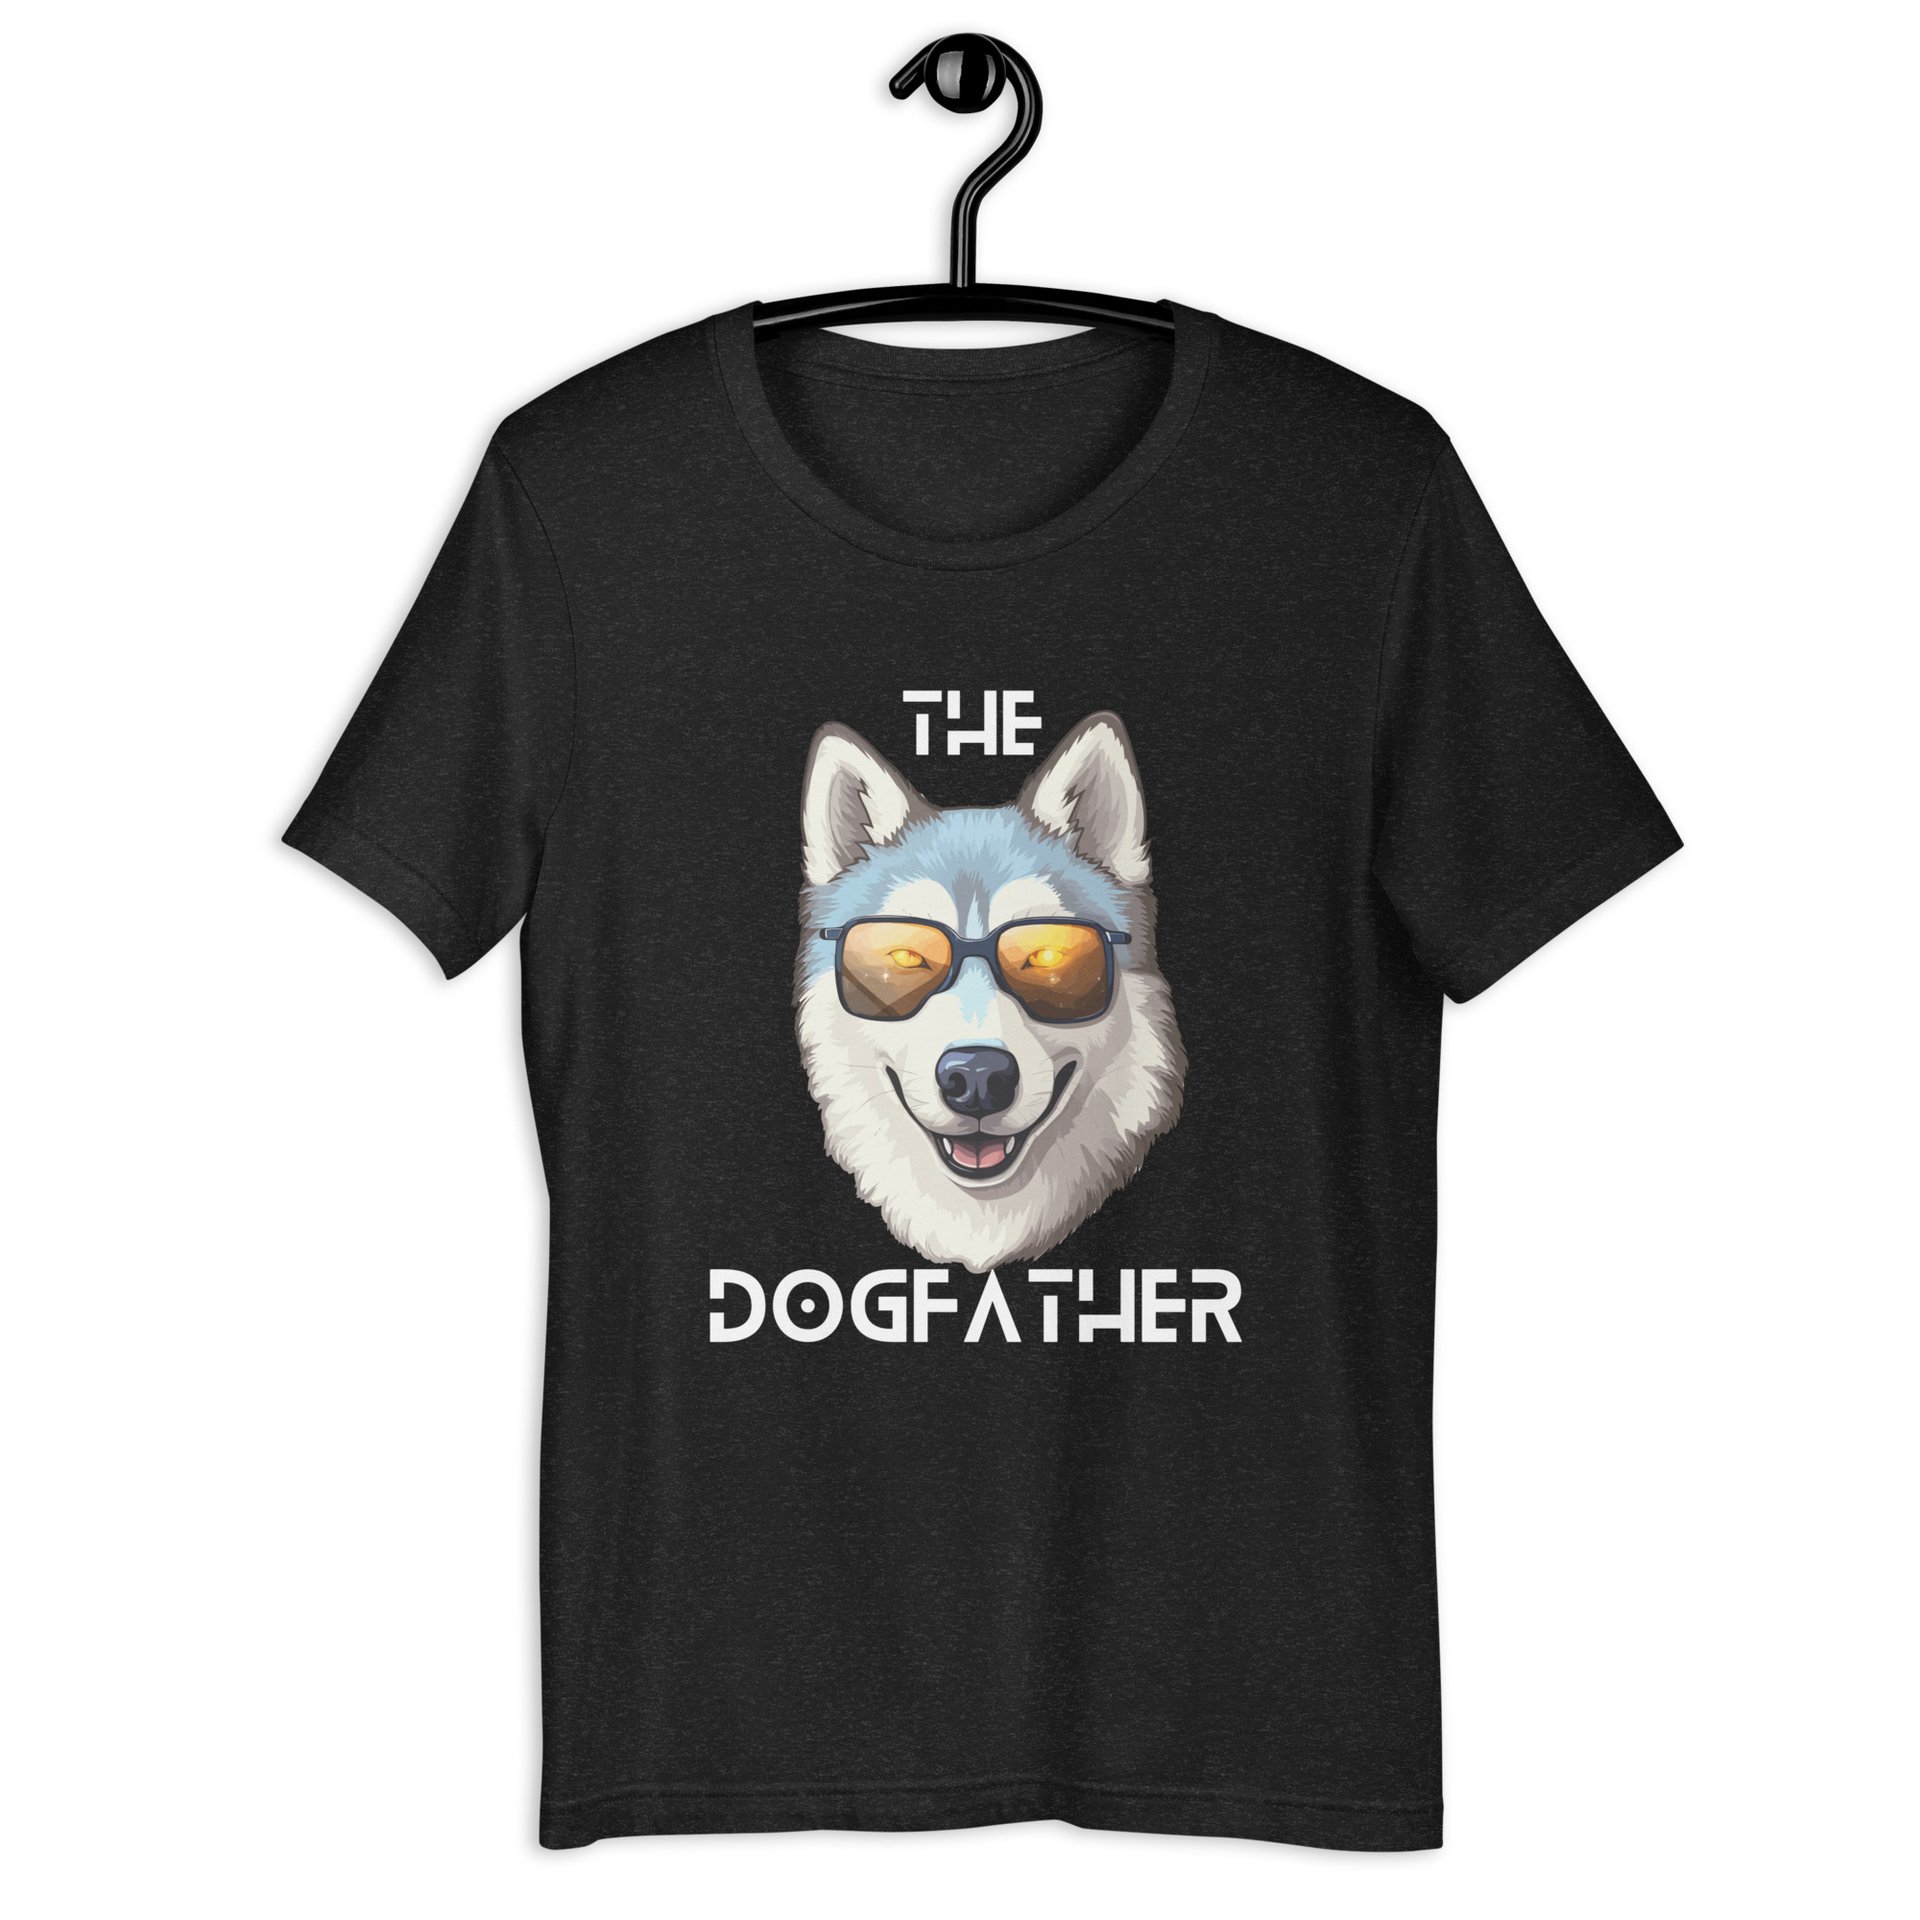 The Dogfather Huskies Unisex T-Shirt. Black Heather